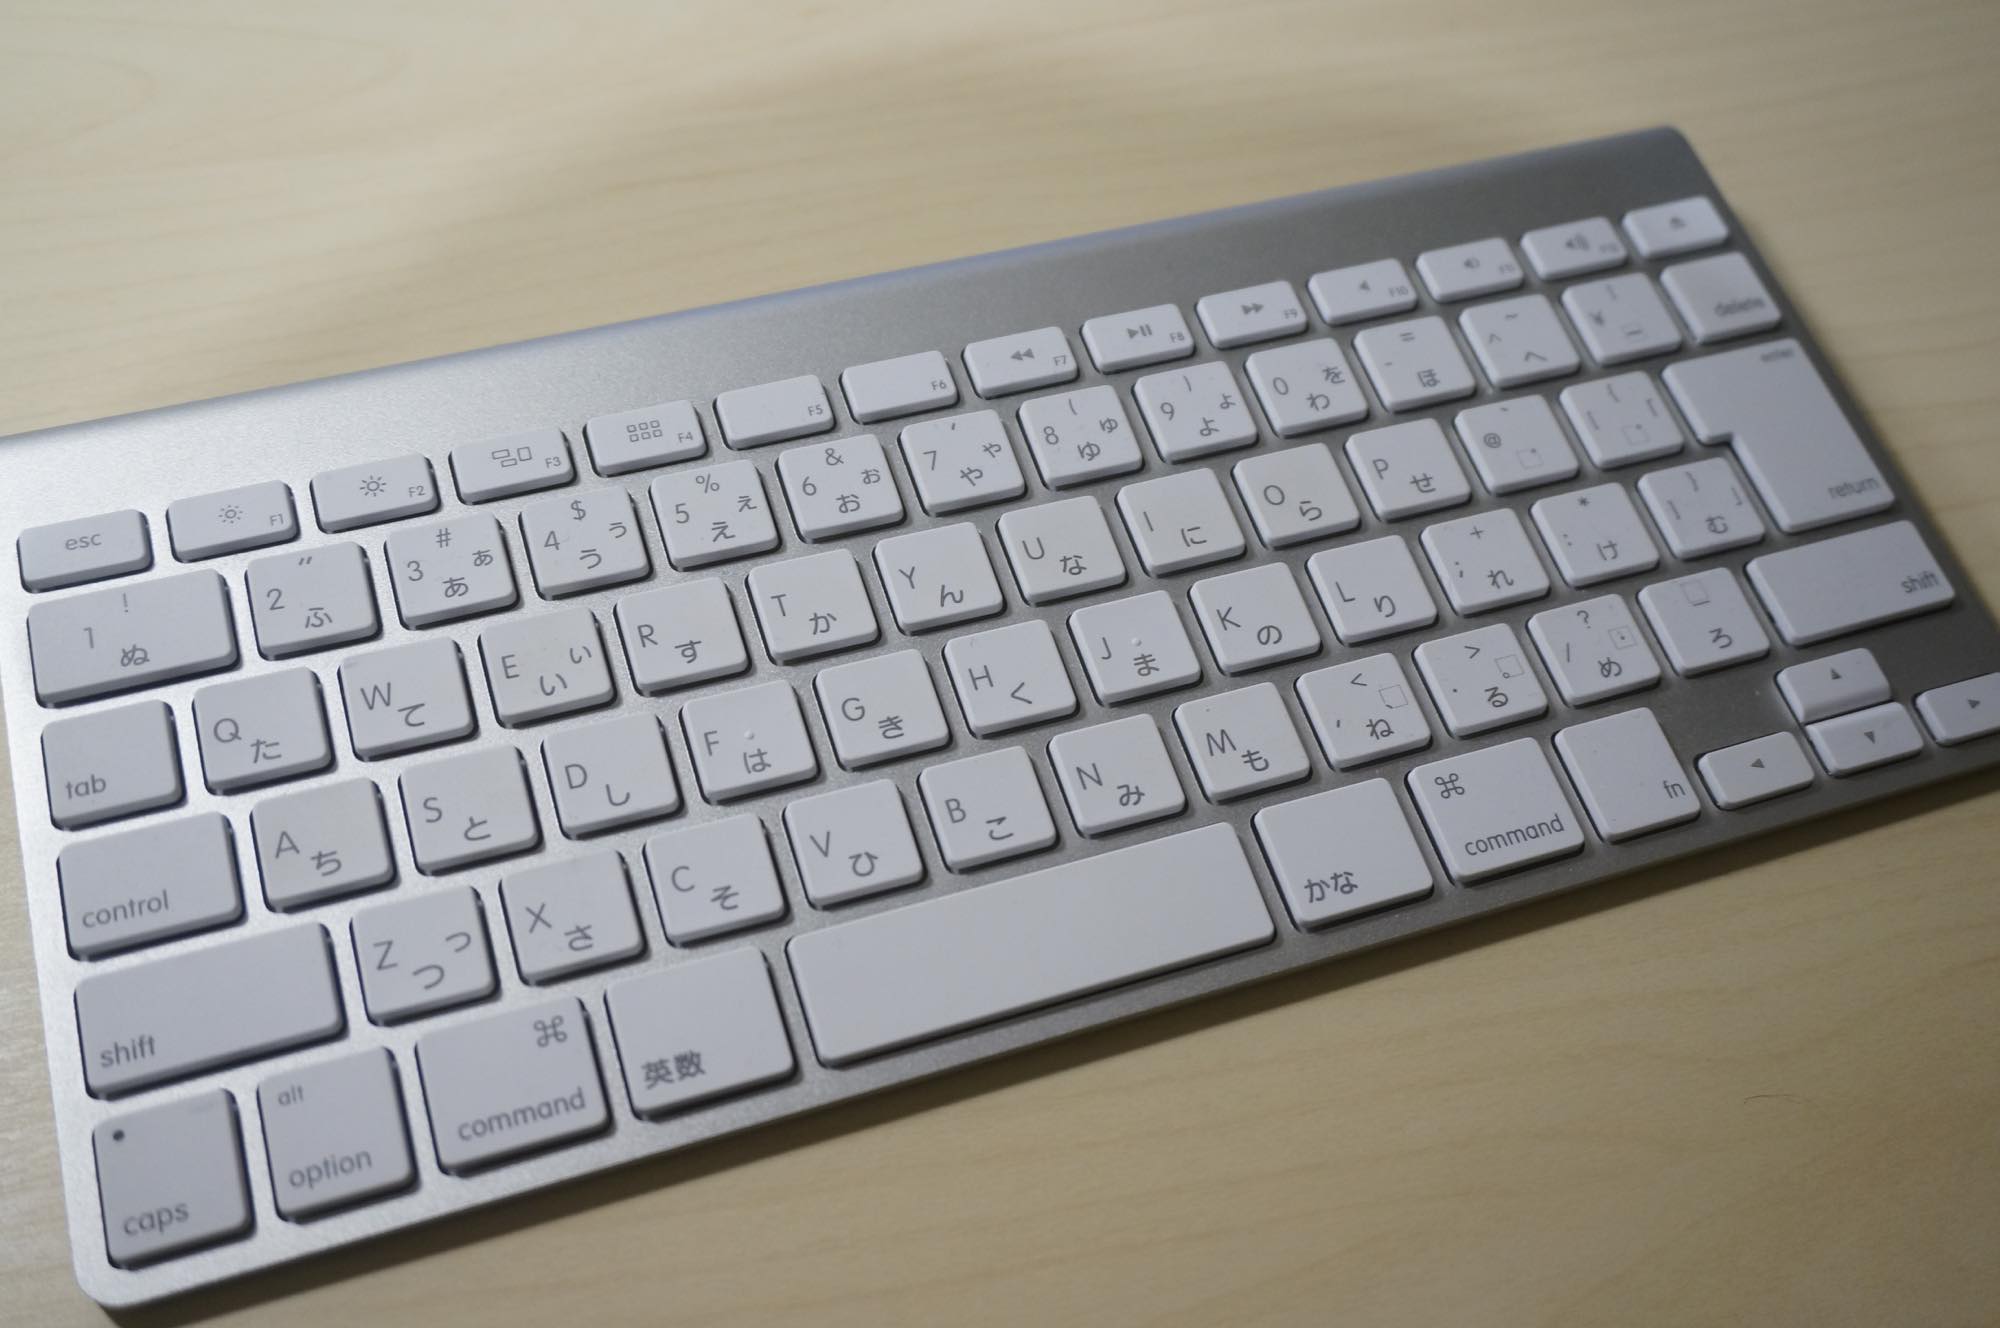 Apple Wireless Keyboard レビュー。Mac & iPad の自宅用キーボードとして最適